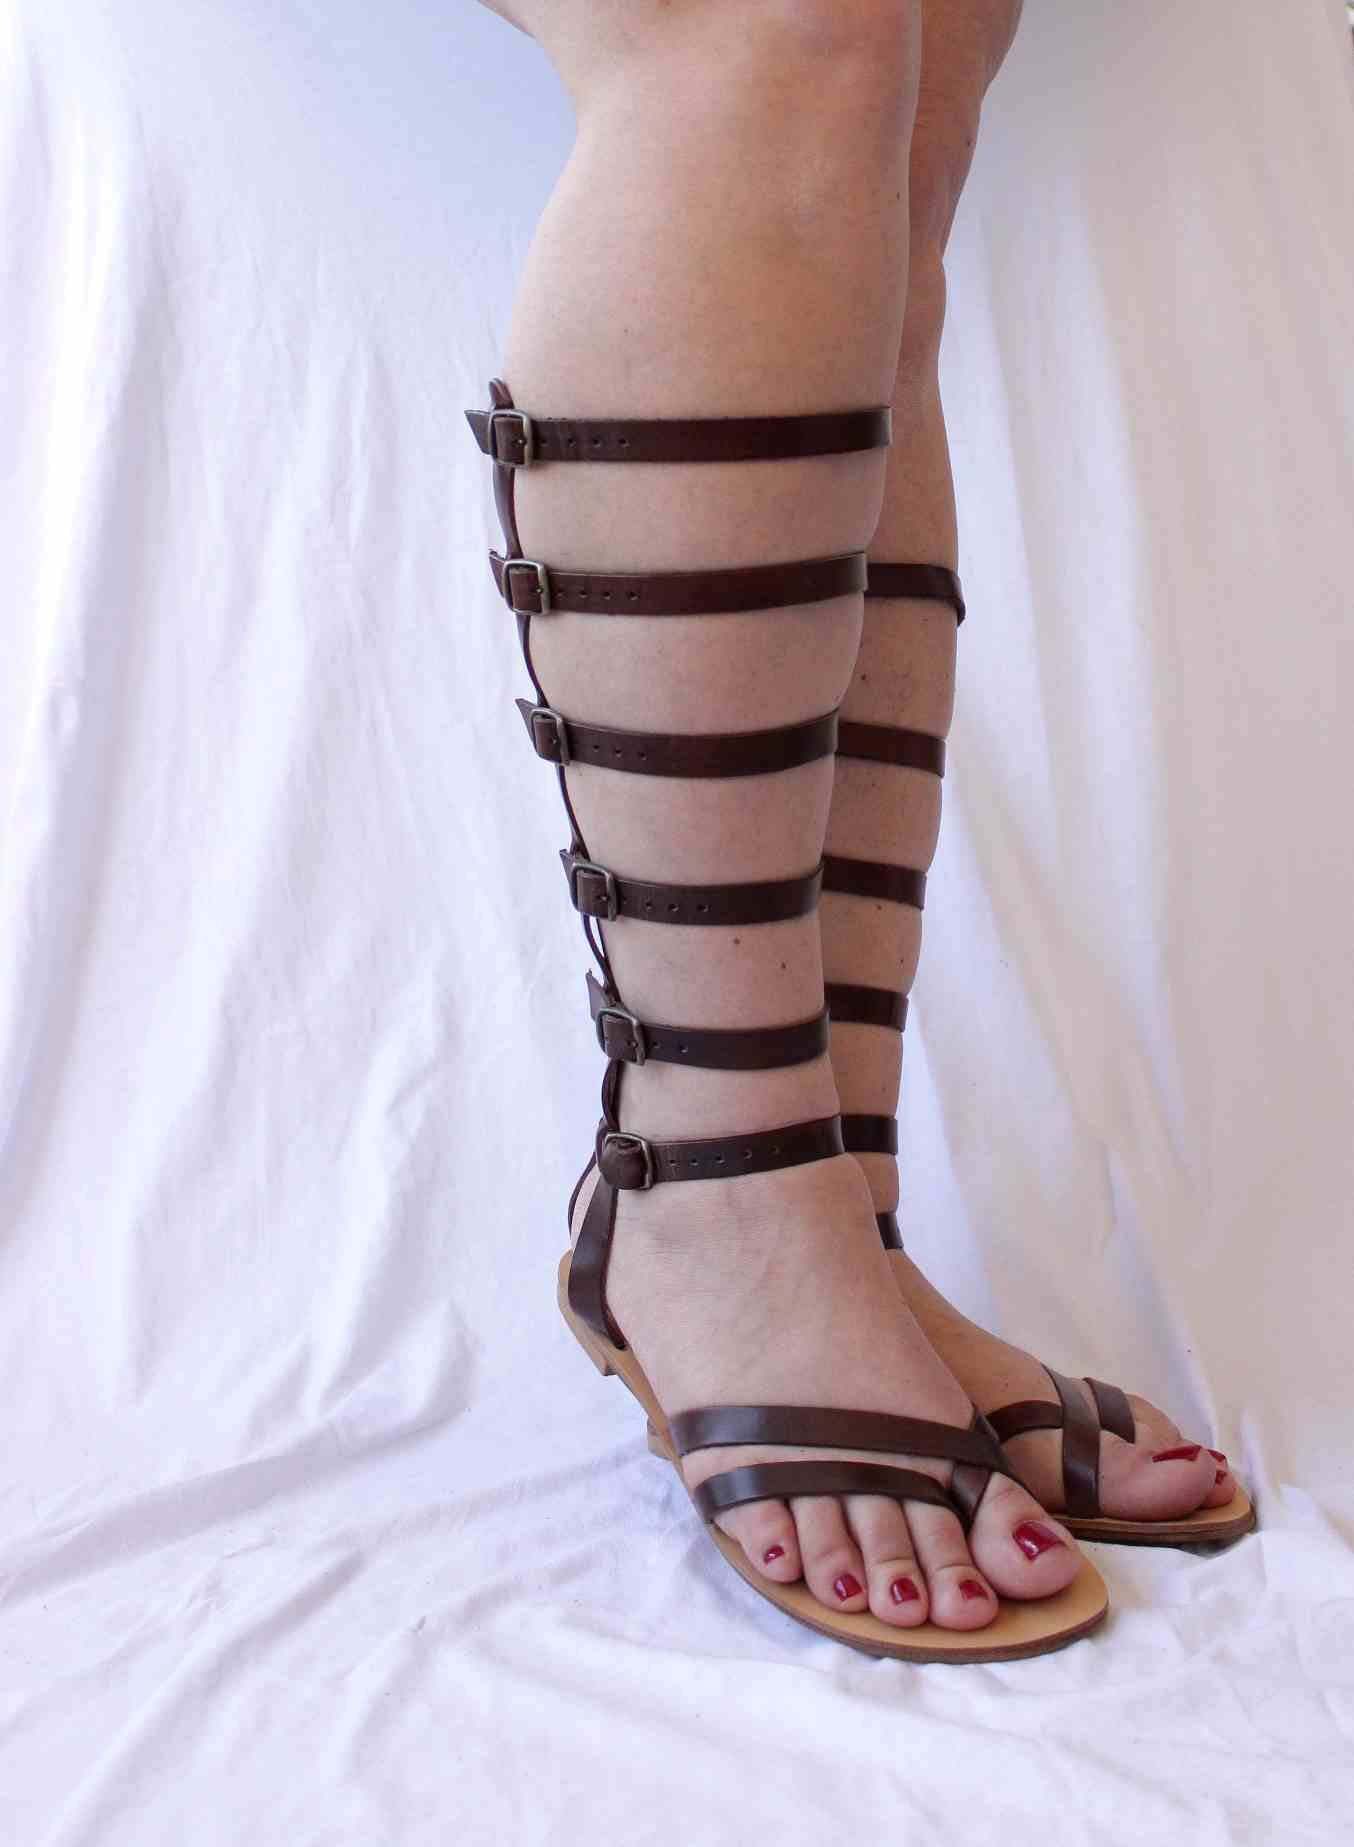 Sandali donna Gladiator strappy high knee boot sandal Sandali fatti a mano in pelle greca Kokkashoes Scarpe Calzature donna Sandali Sandali stile gladiatore e incrociati 